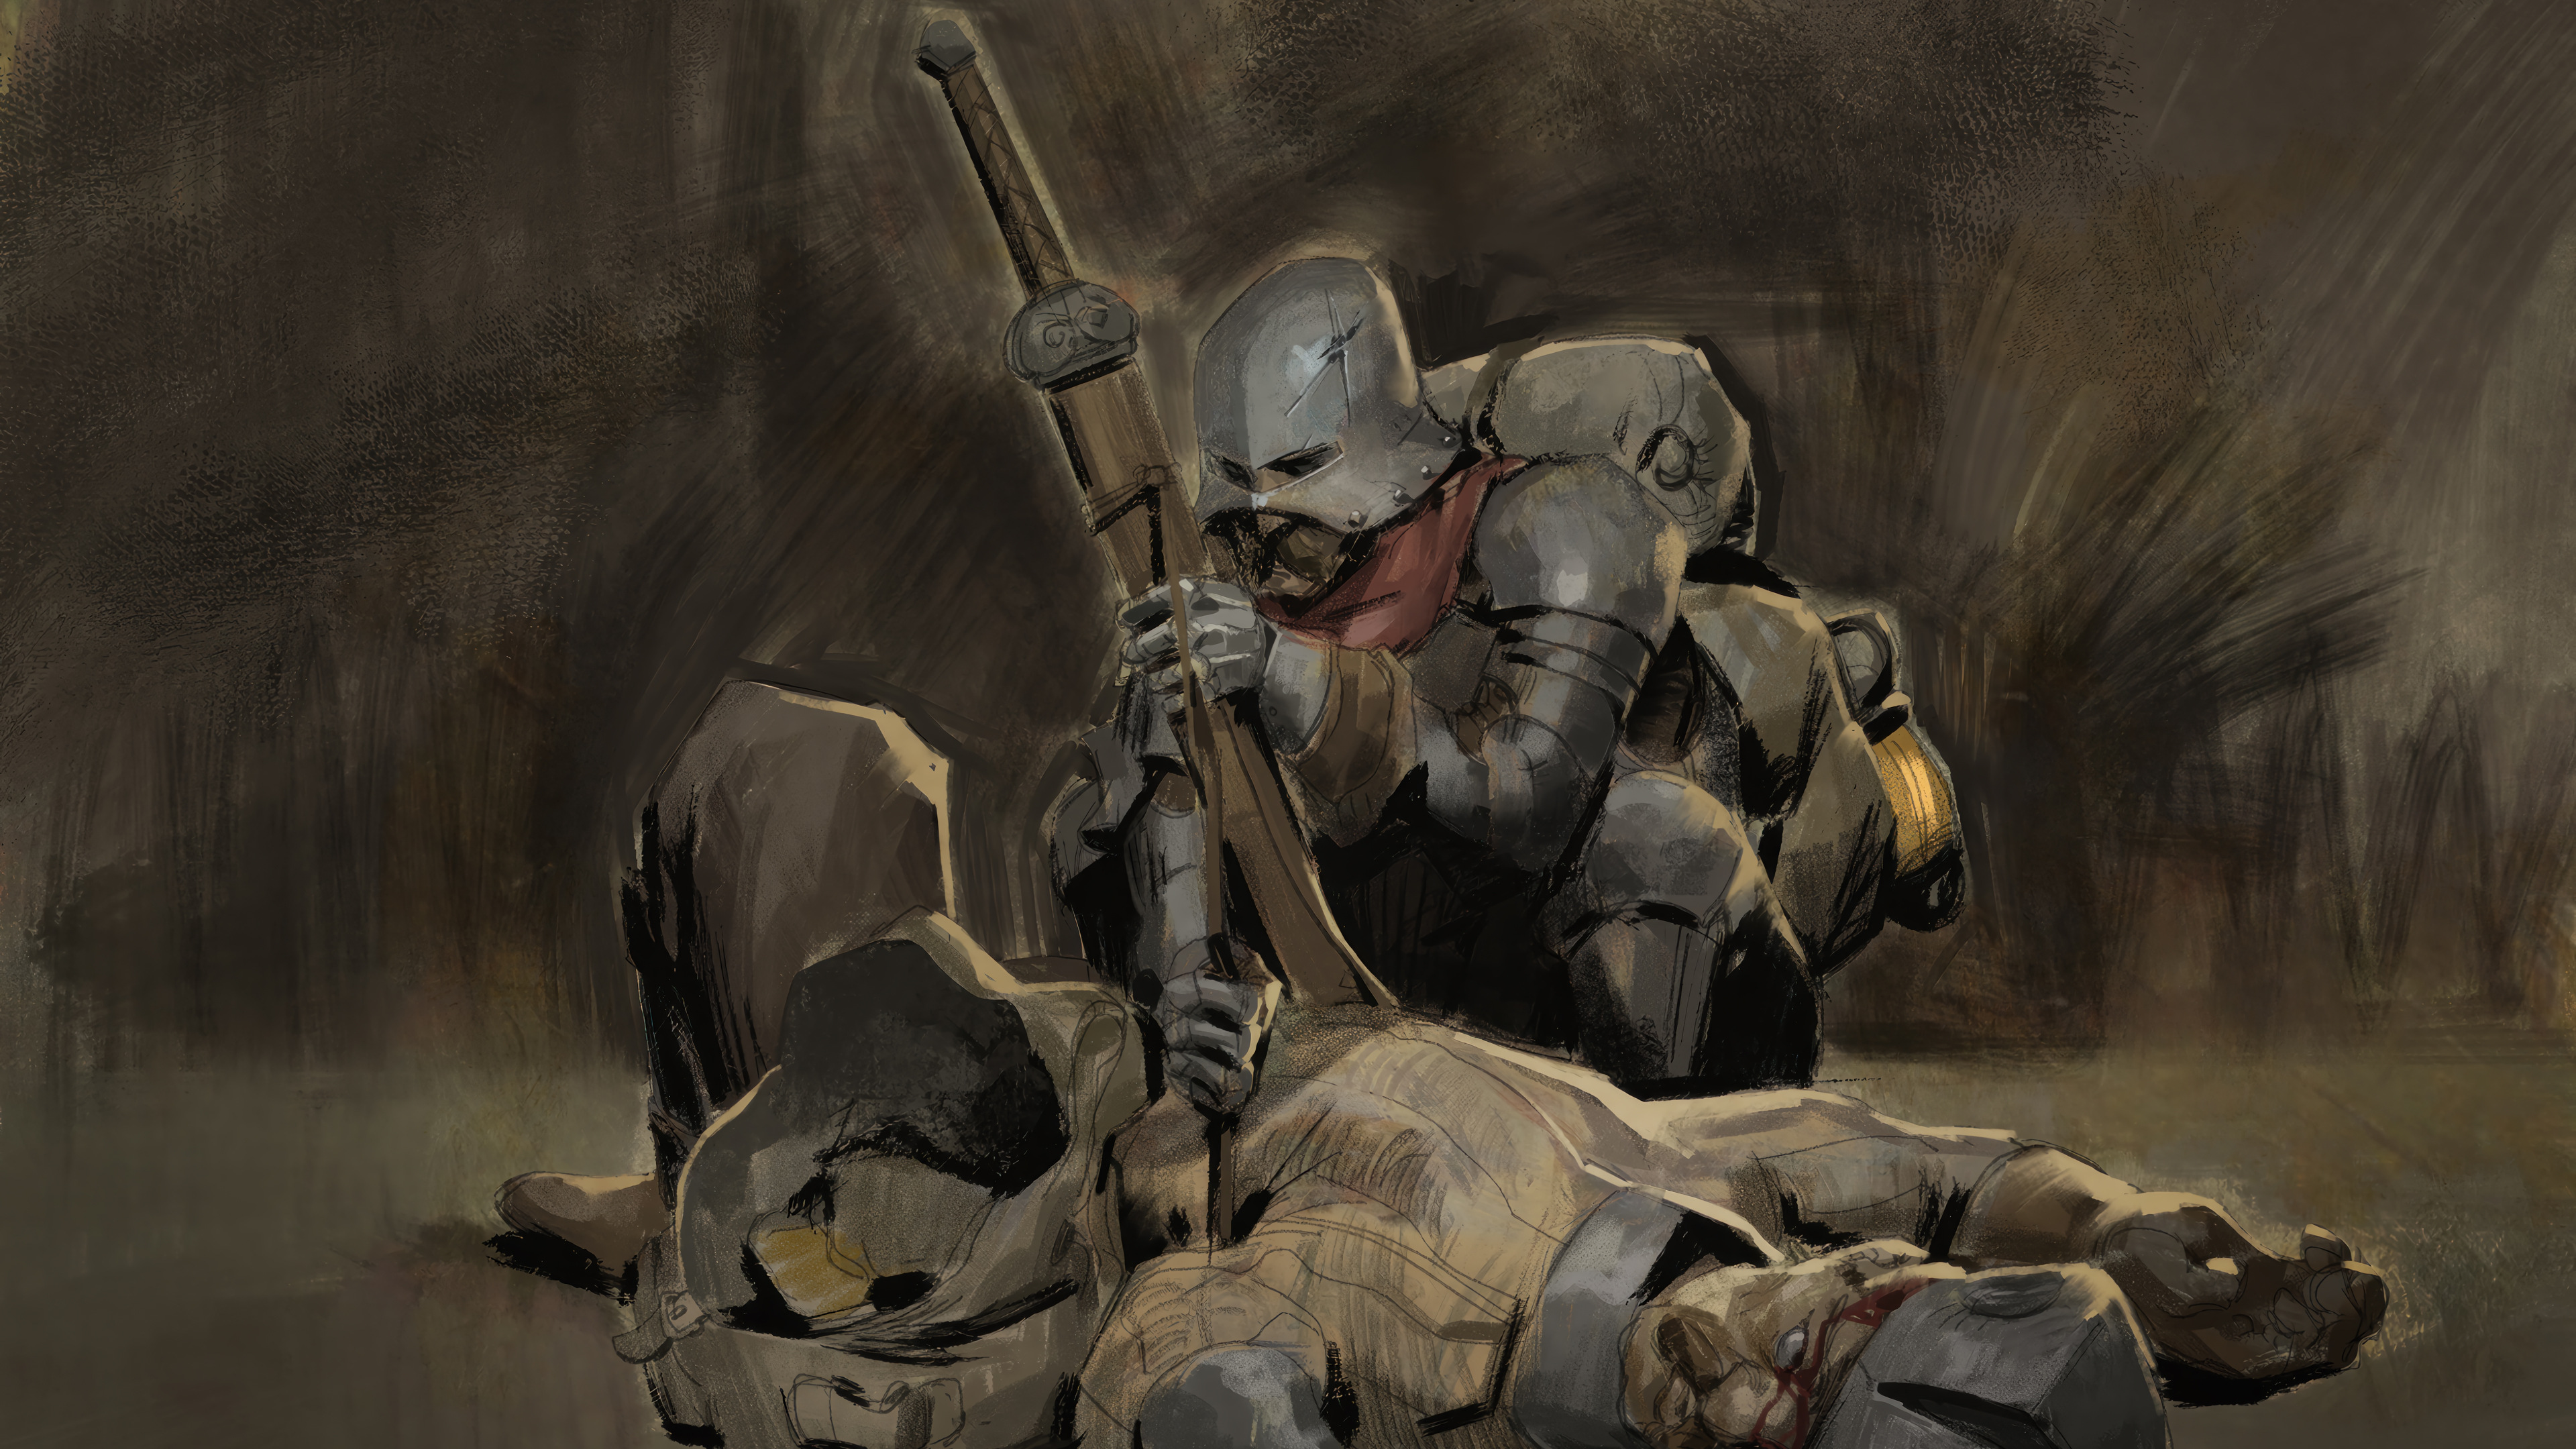 Dark and Darker themed HD desktop wallpaper featuring a warrior in armor kneeling over a fallen comrade in a shadowy battlefield setting.